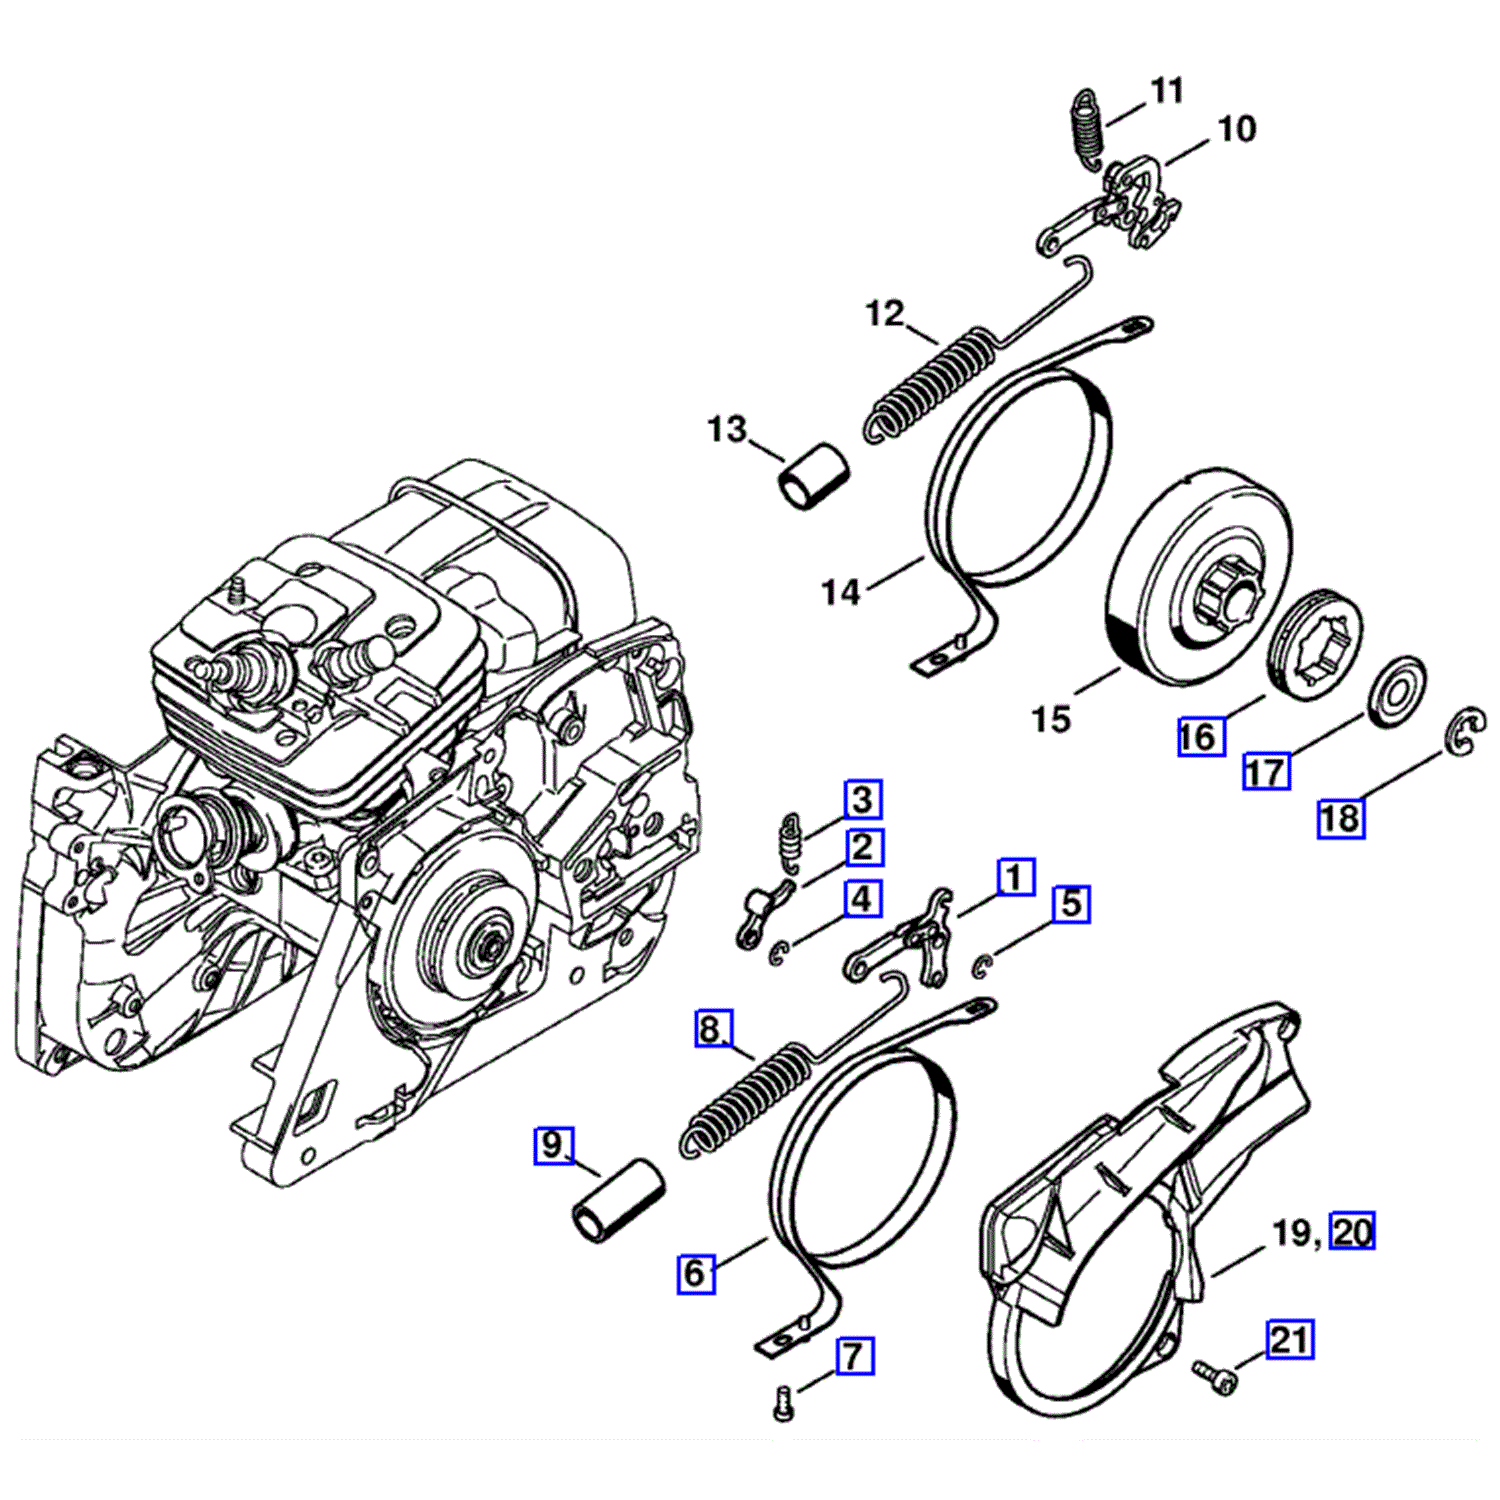 Stihl MS 361 Chainsaw (MS361 W) Parts Diagram, Chain Brake